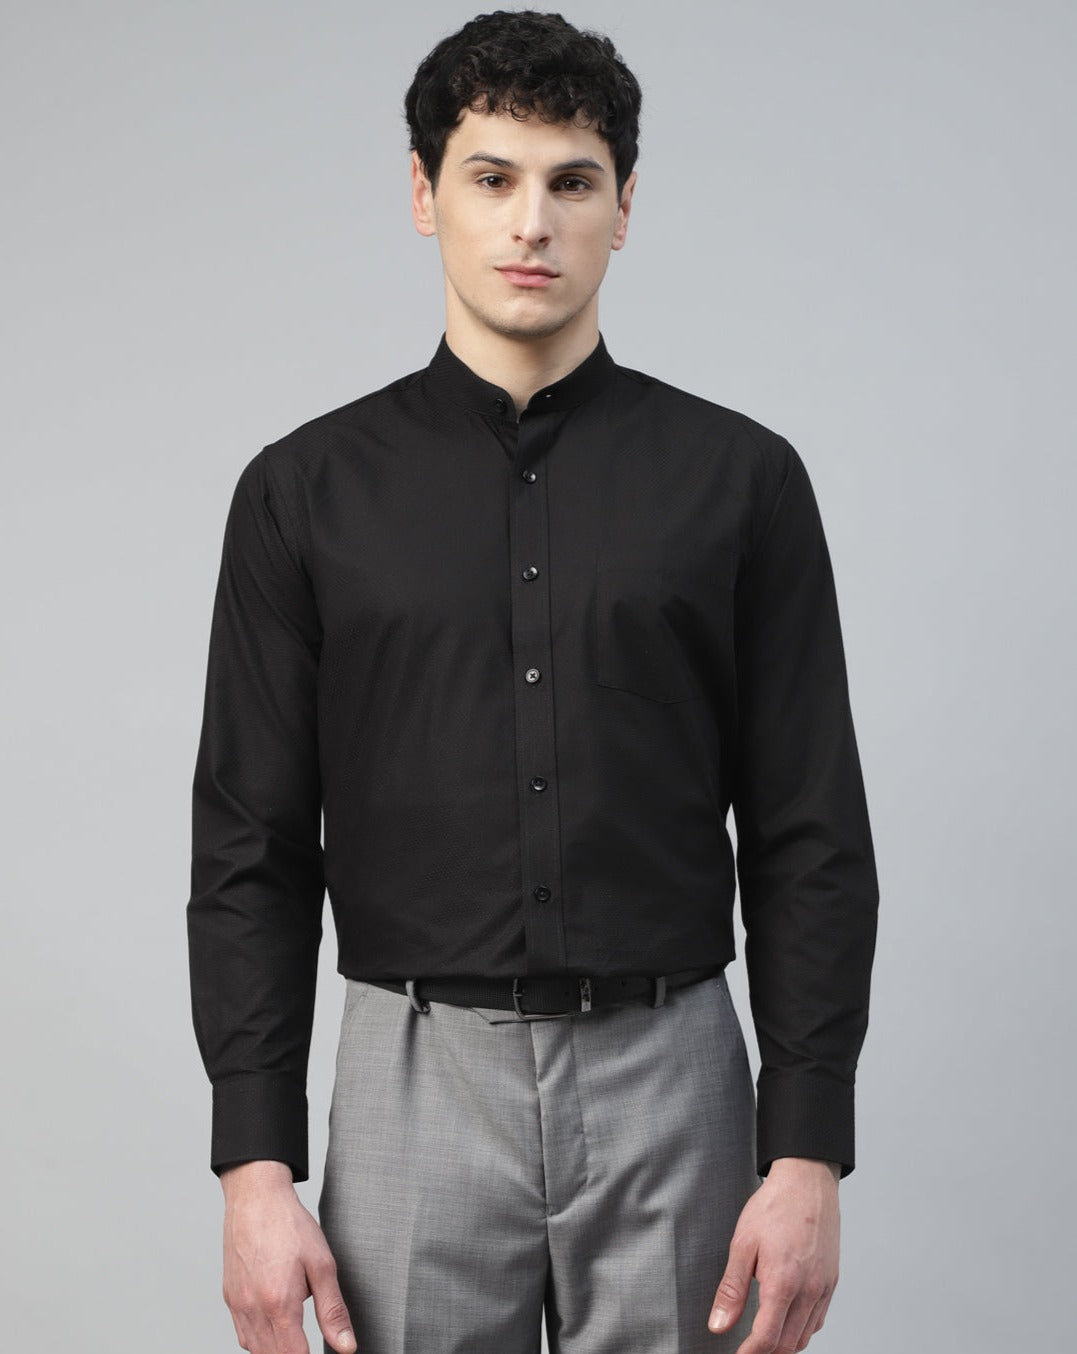 Black 100% Structured Evening Wear Shirt